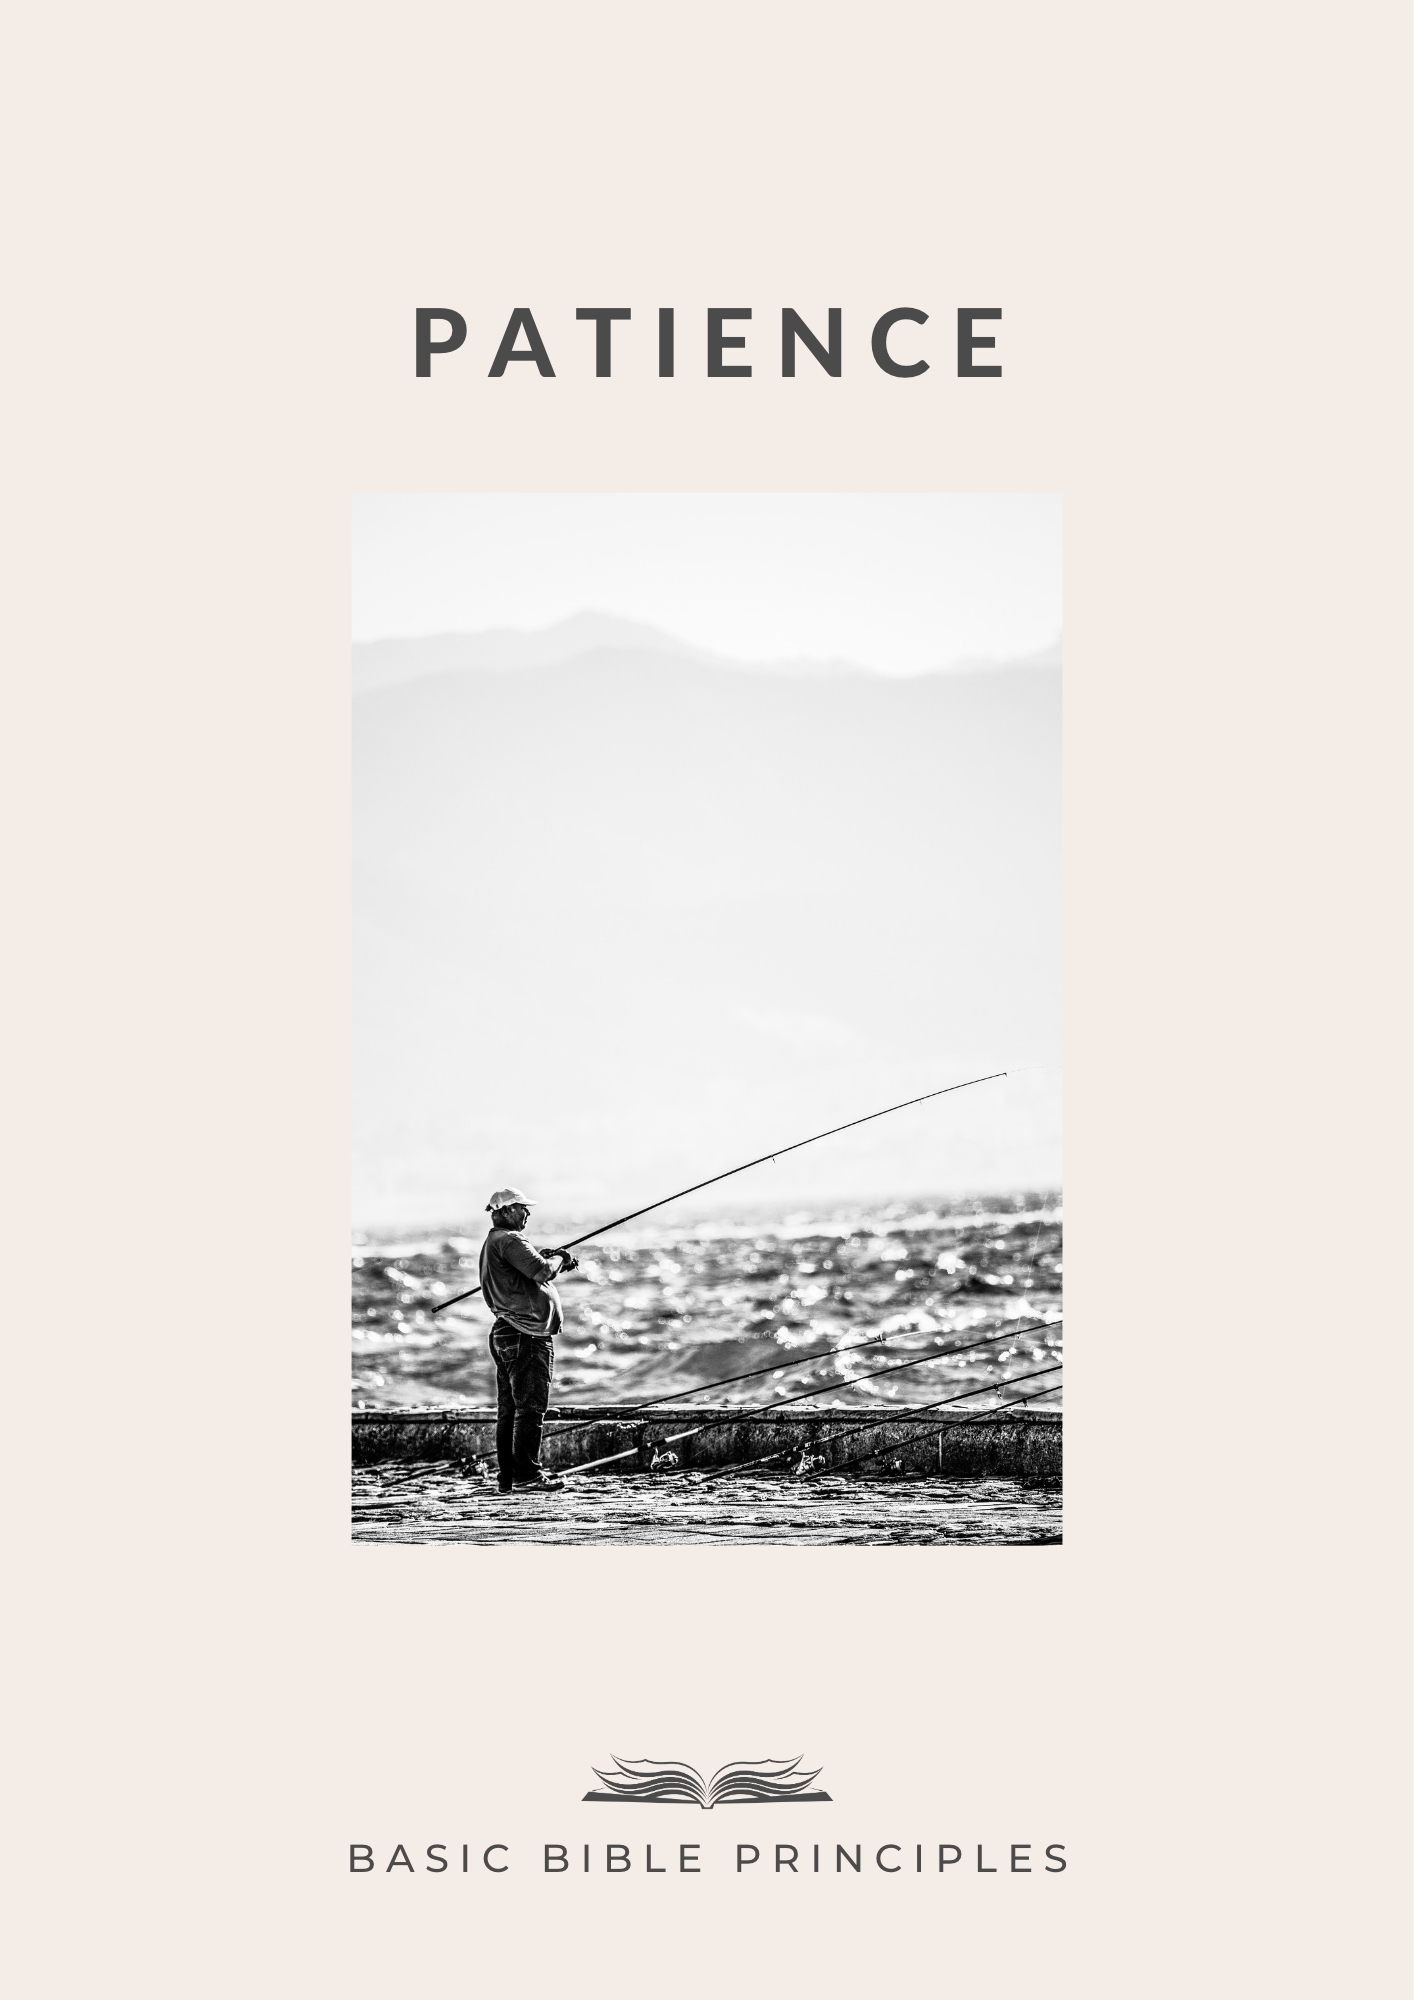 Basic Bible Principles: PATIENCE